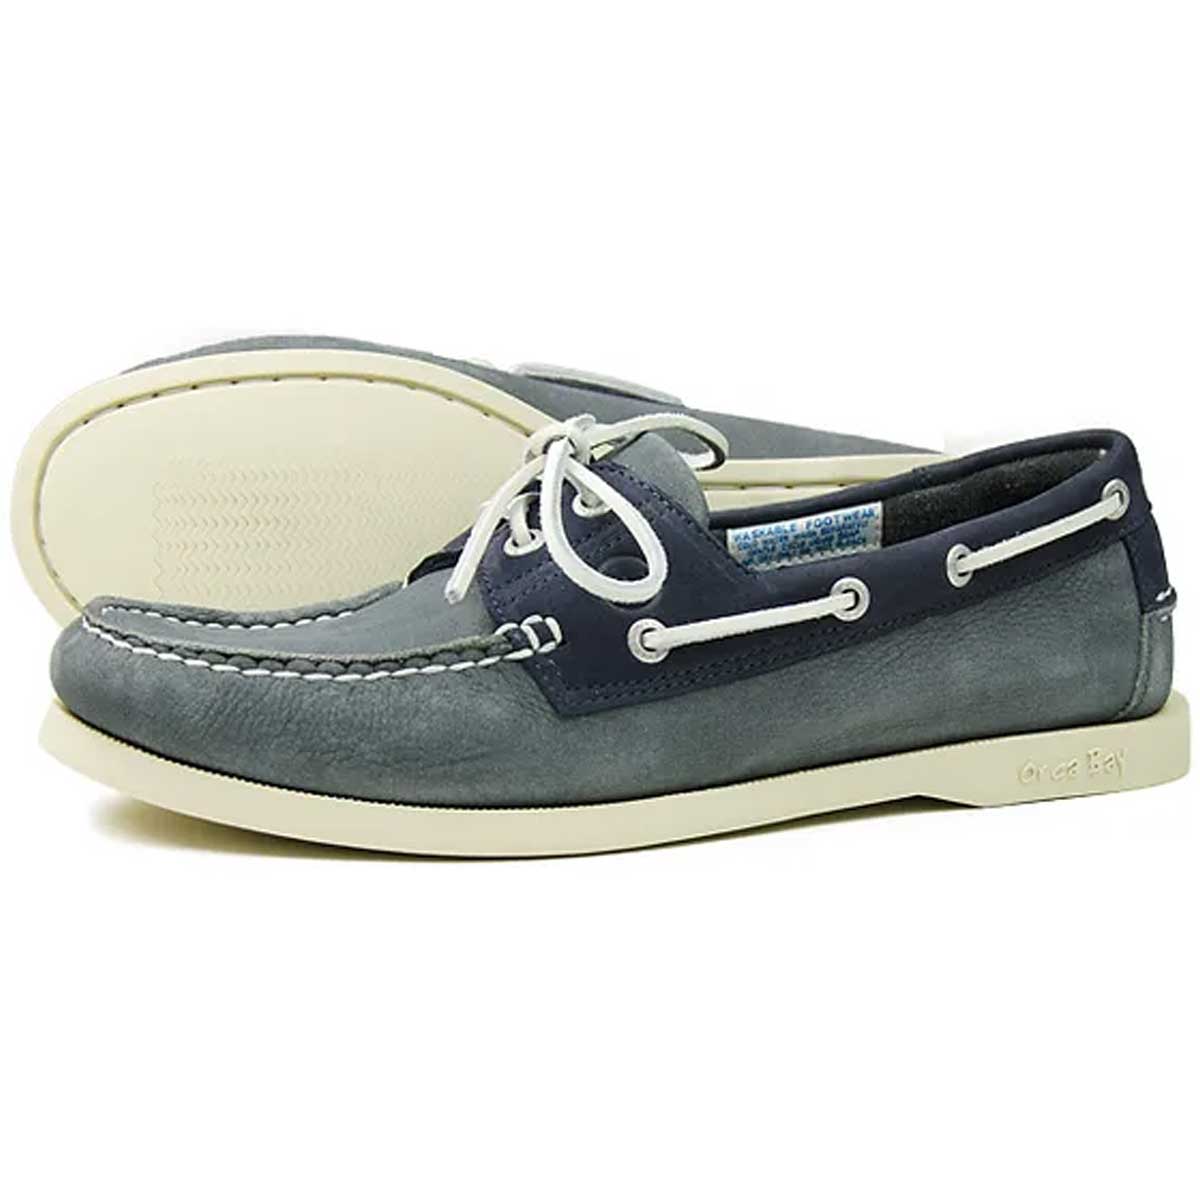 ORCA BAY Sandusky Leather Deck Shoes - Men's - Grey / Indigo